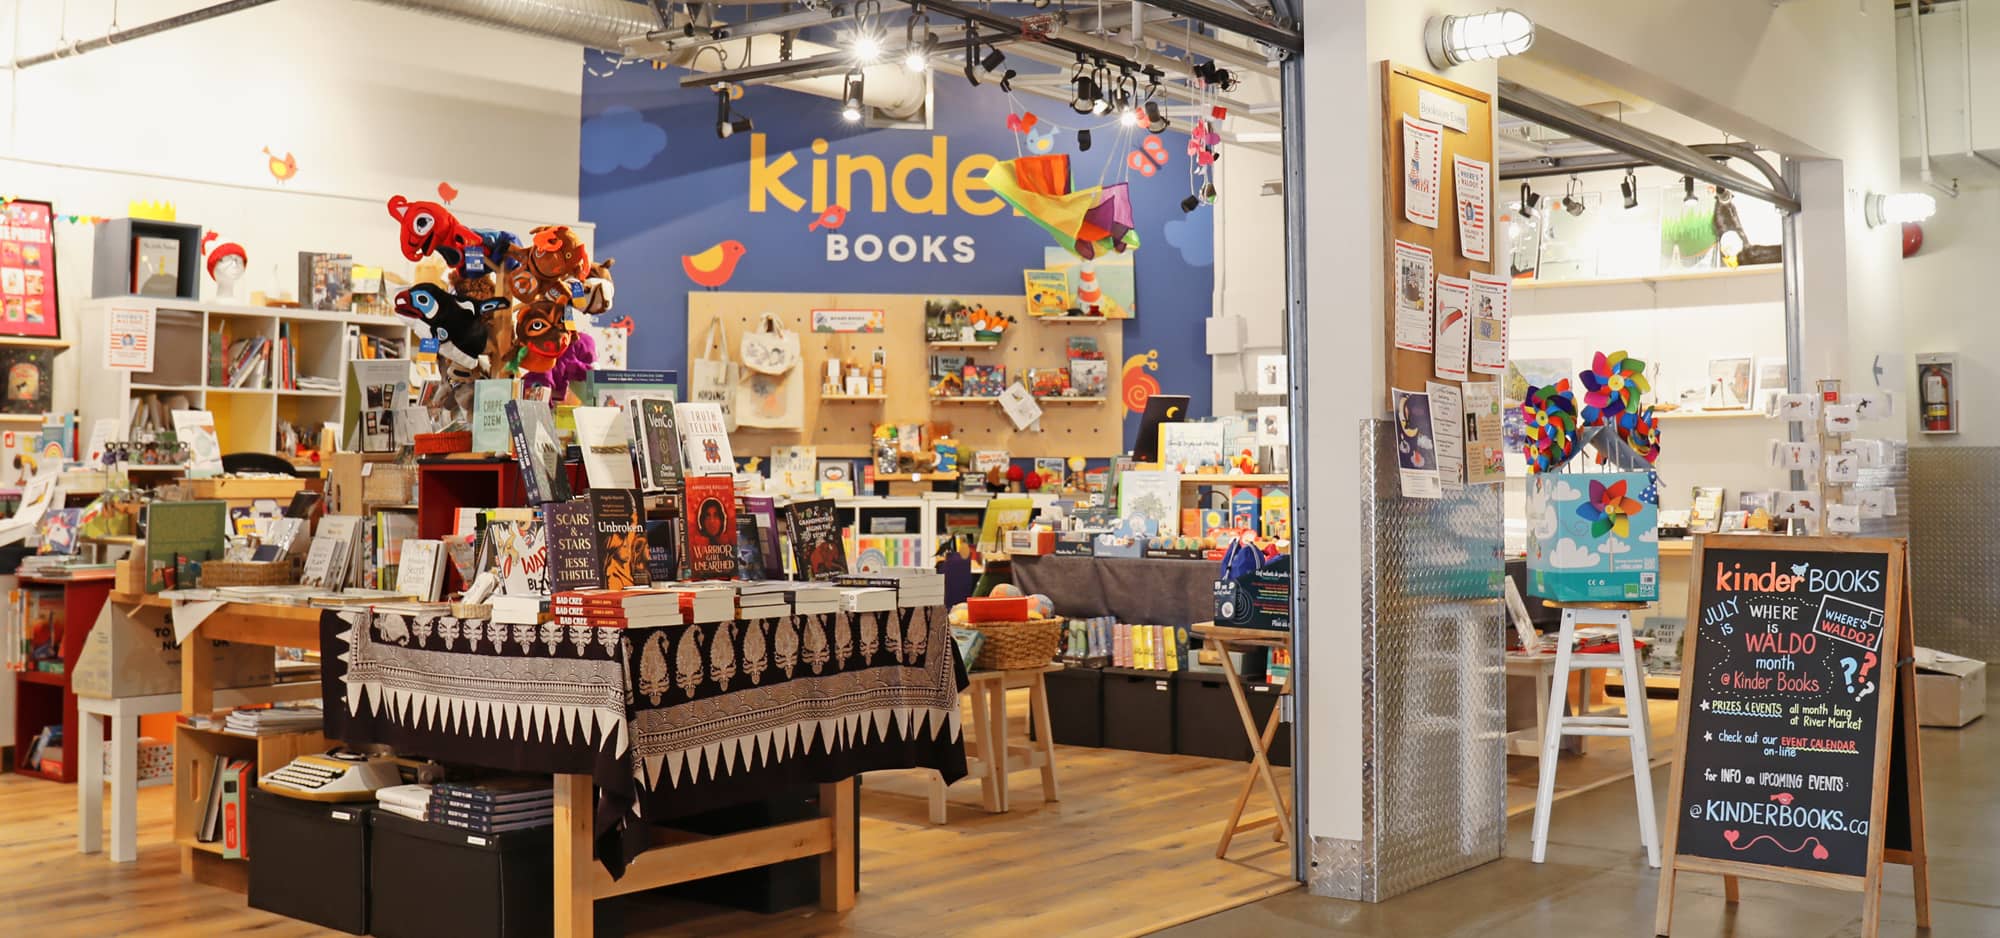 Interior photo of Kinder Book children's bookstore.